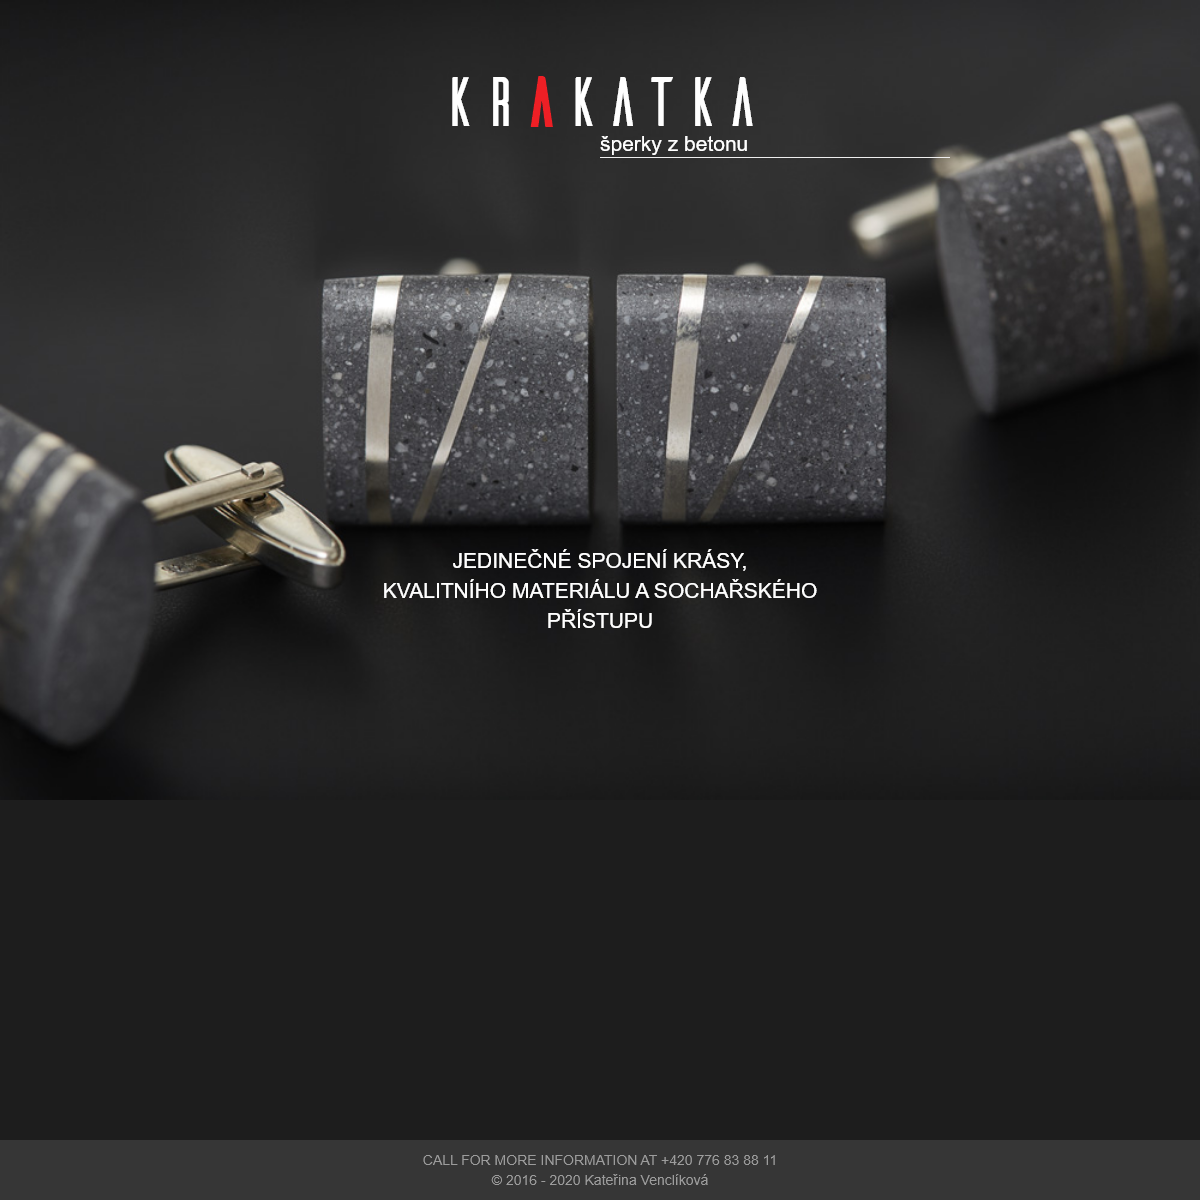 A complete backup of krakatka.cz